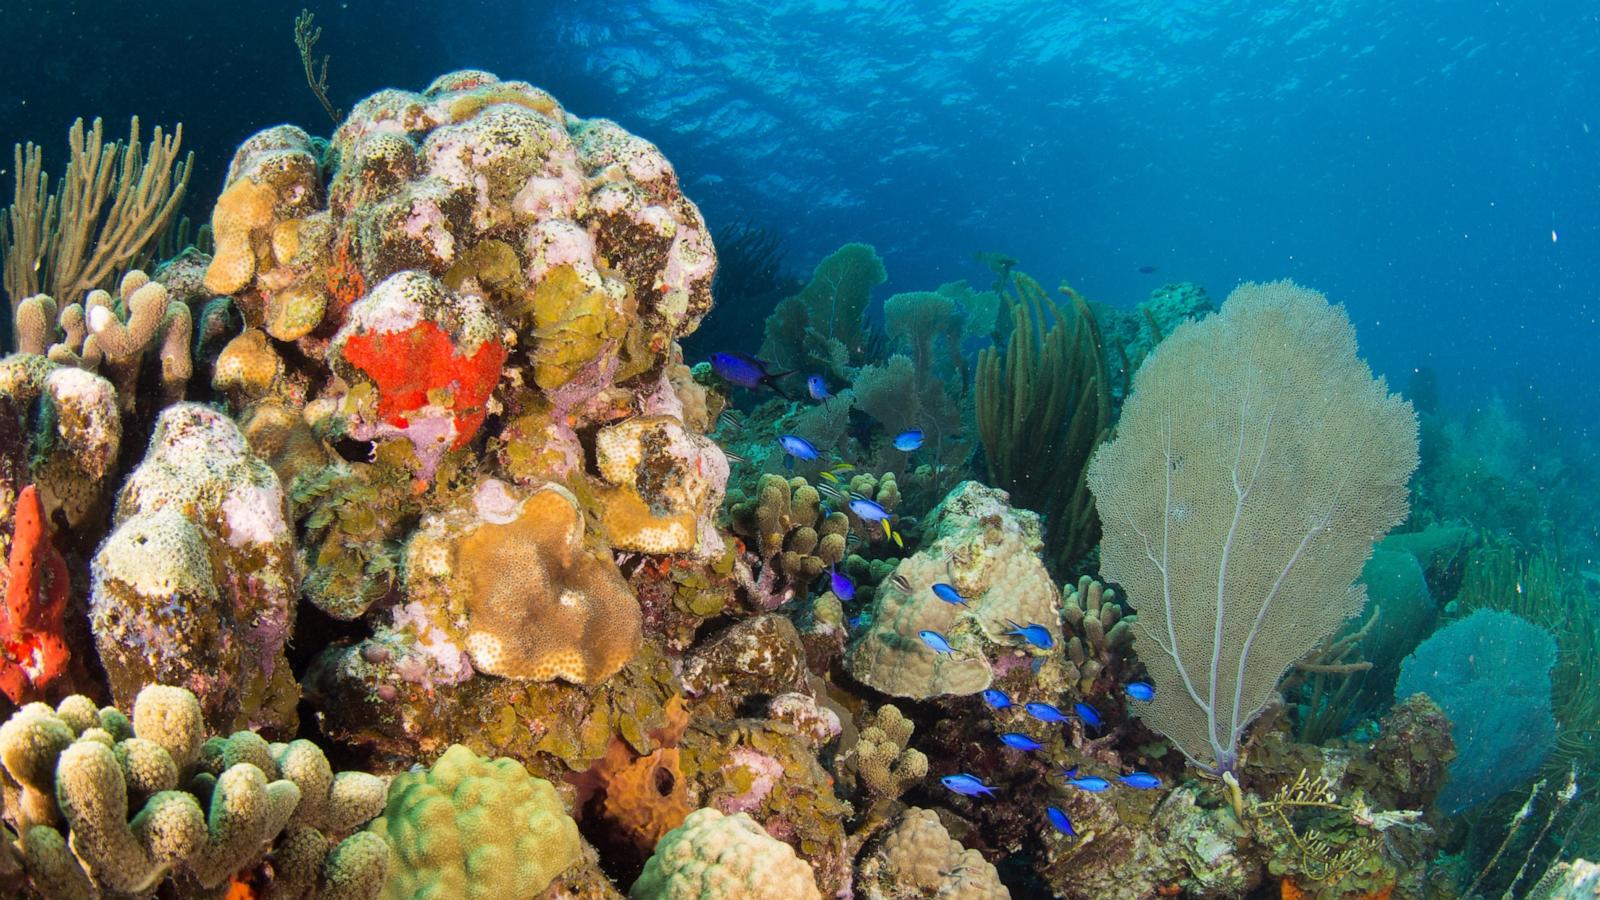 https://s.abcnews.com/images/International/virgin-islands-coral-reef-gty-jt-240312_1710266254013_hpMain_16x9_1600.jpg